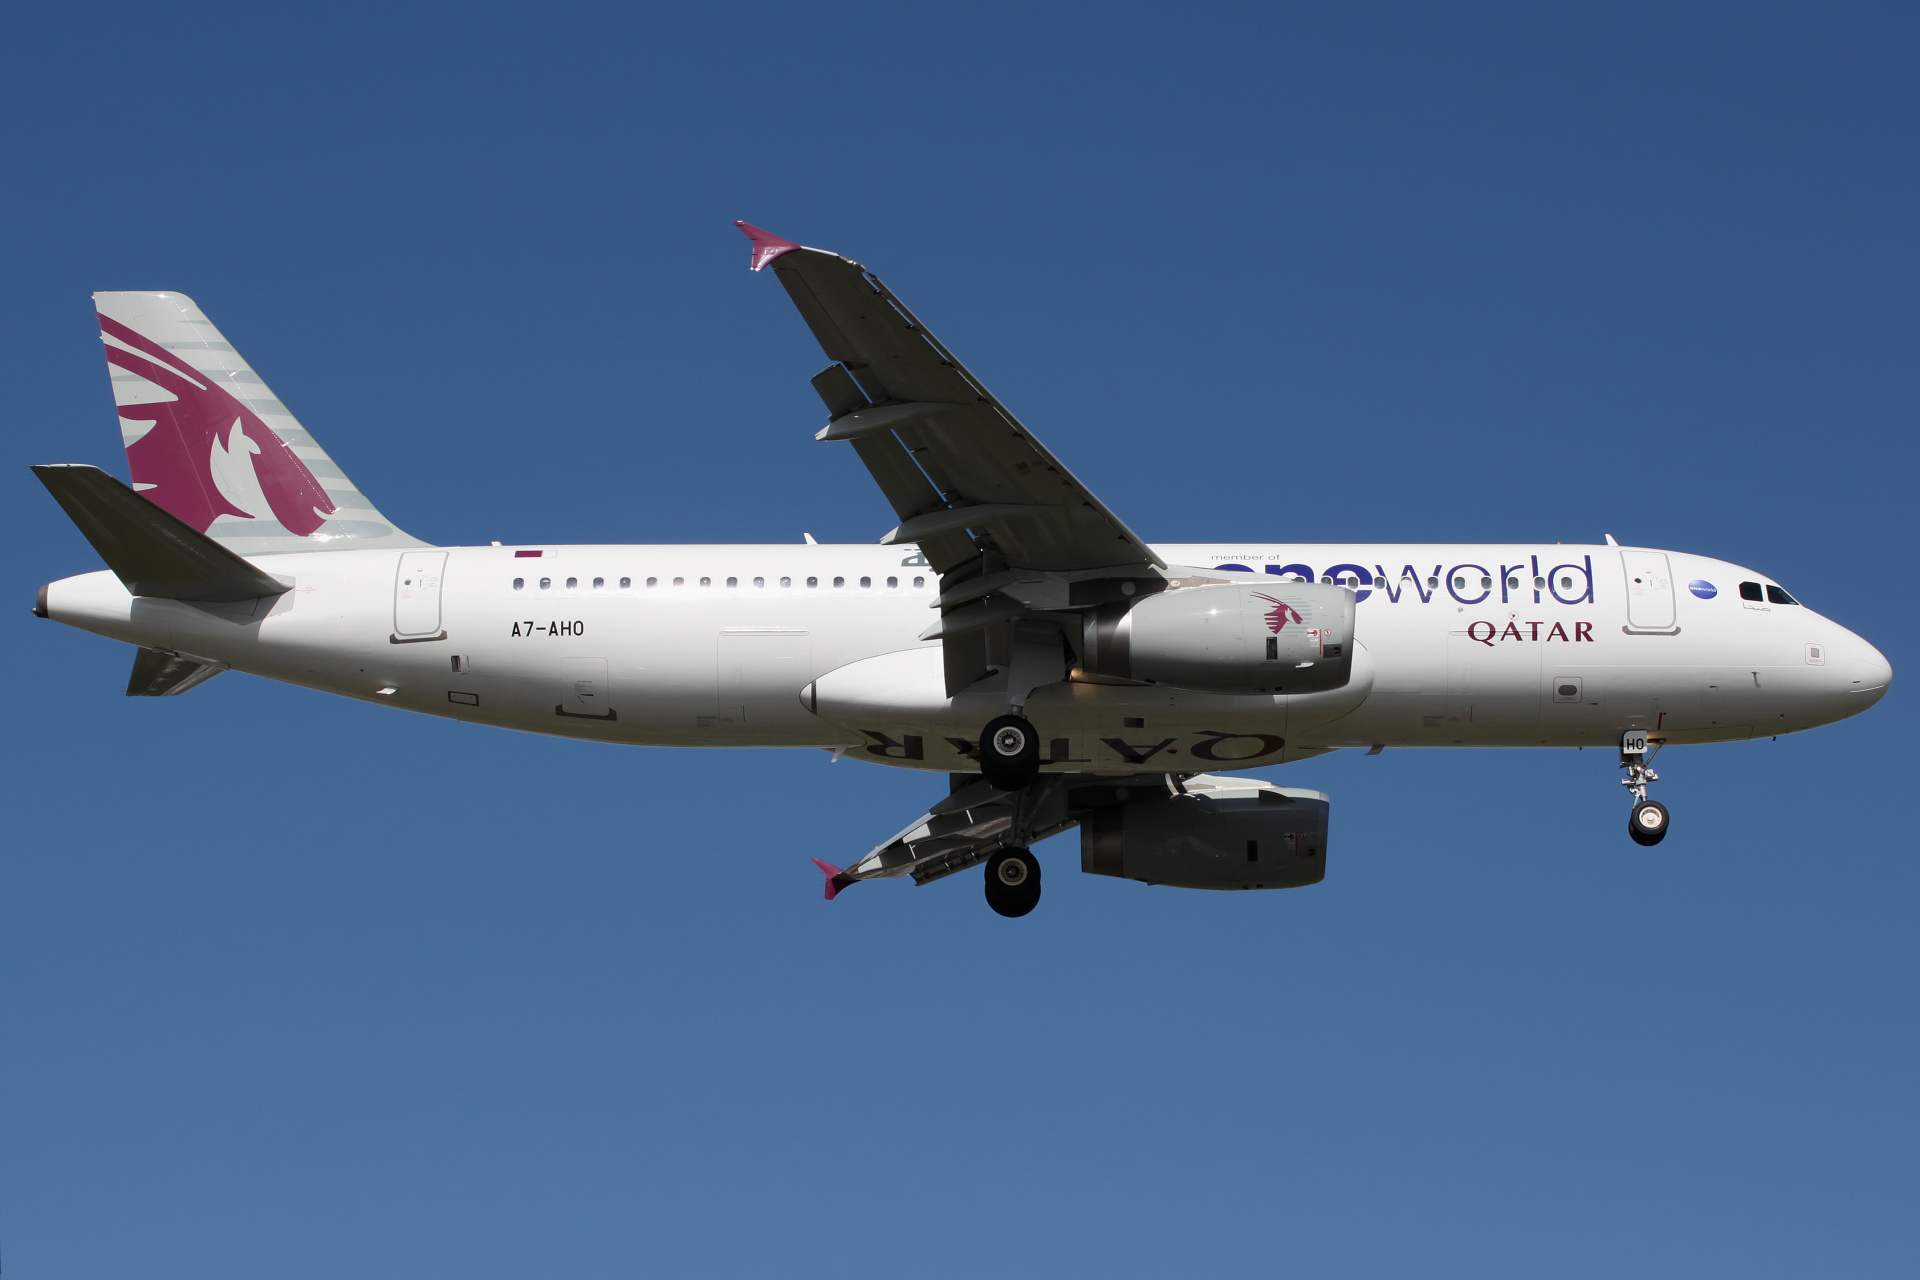 A7-AHO (OneWorld livery) (Aircraft » EPWA Spotting » Airbus A320-200 » Qatar Airways)